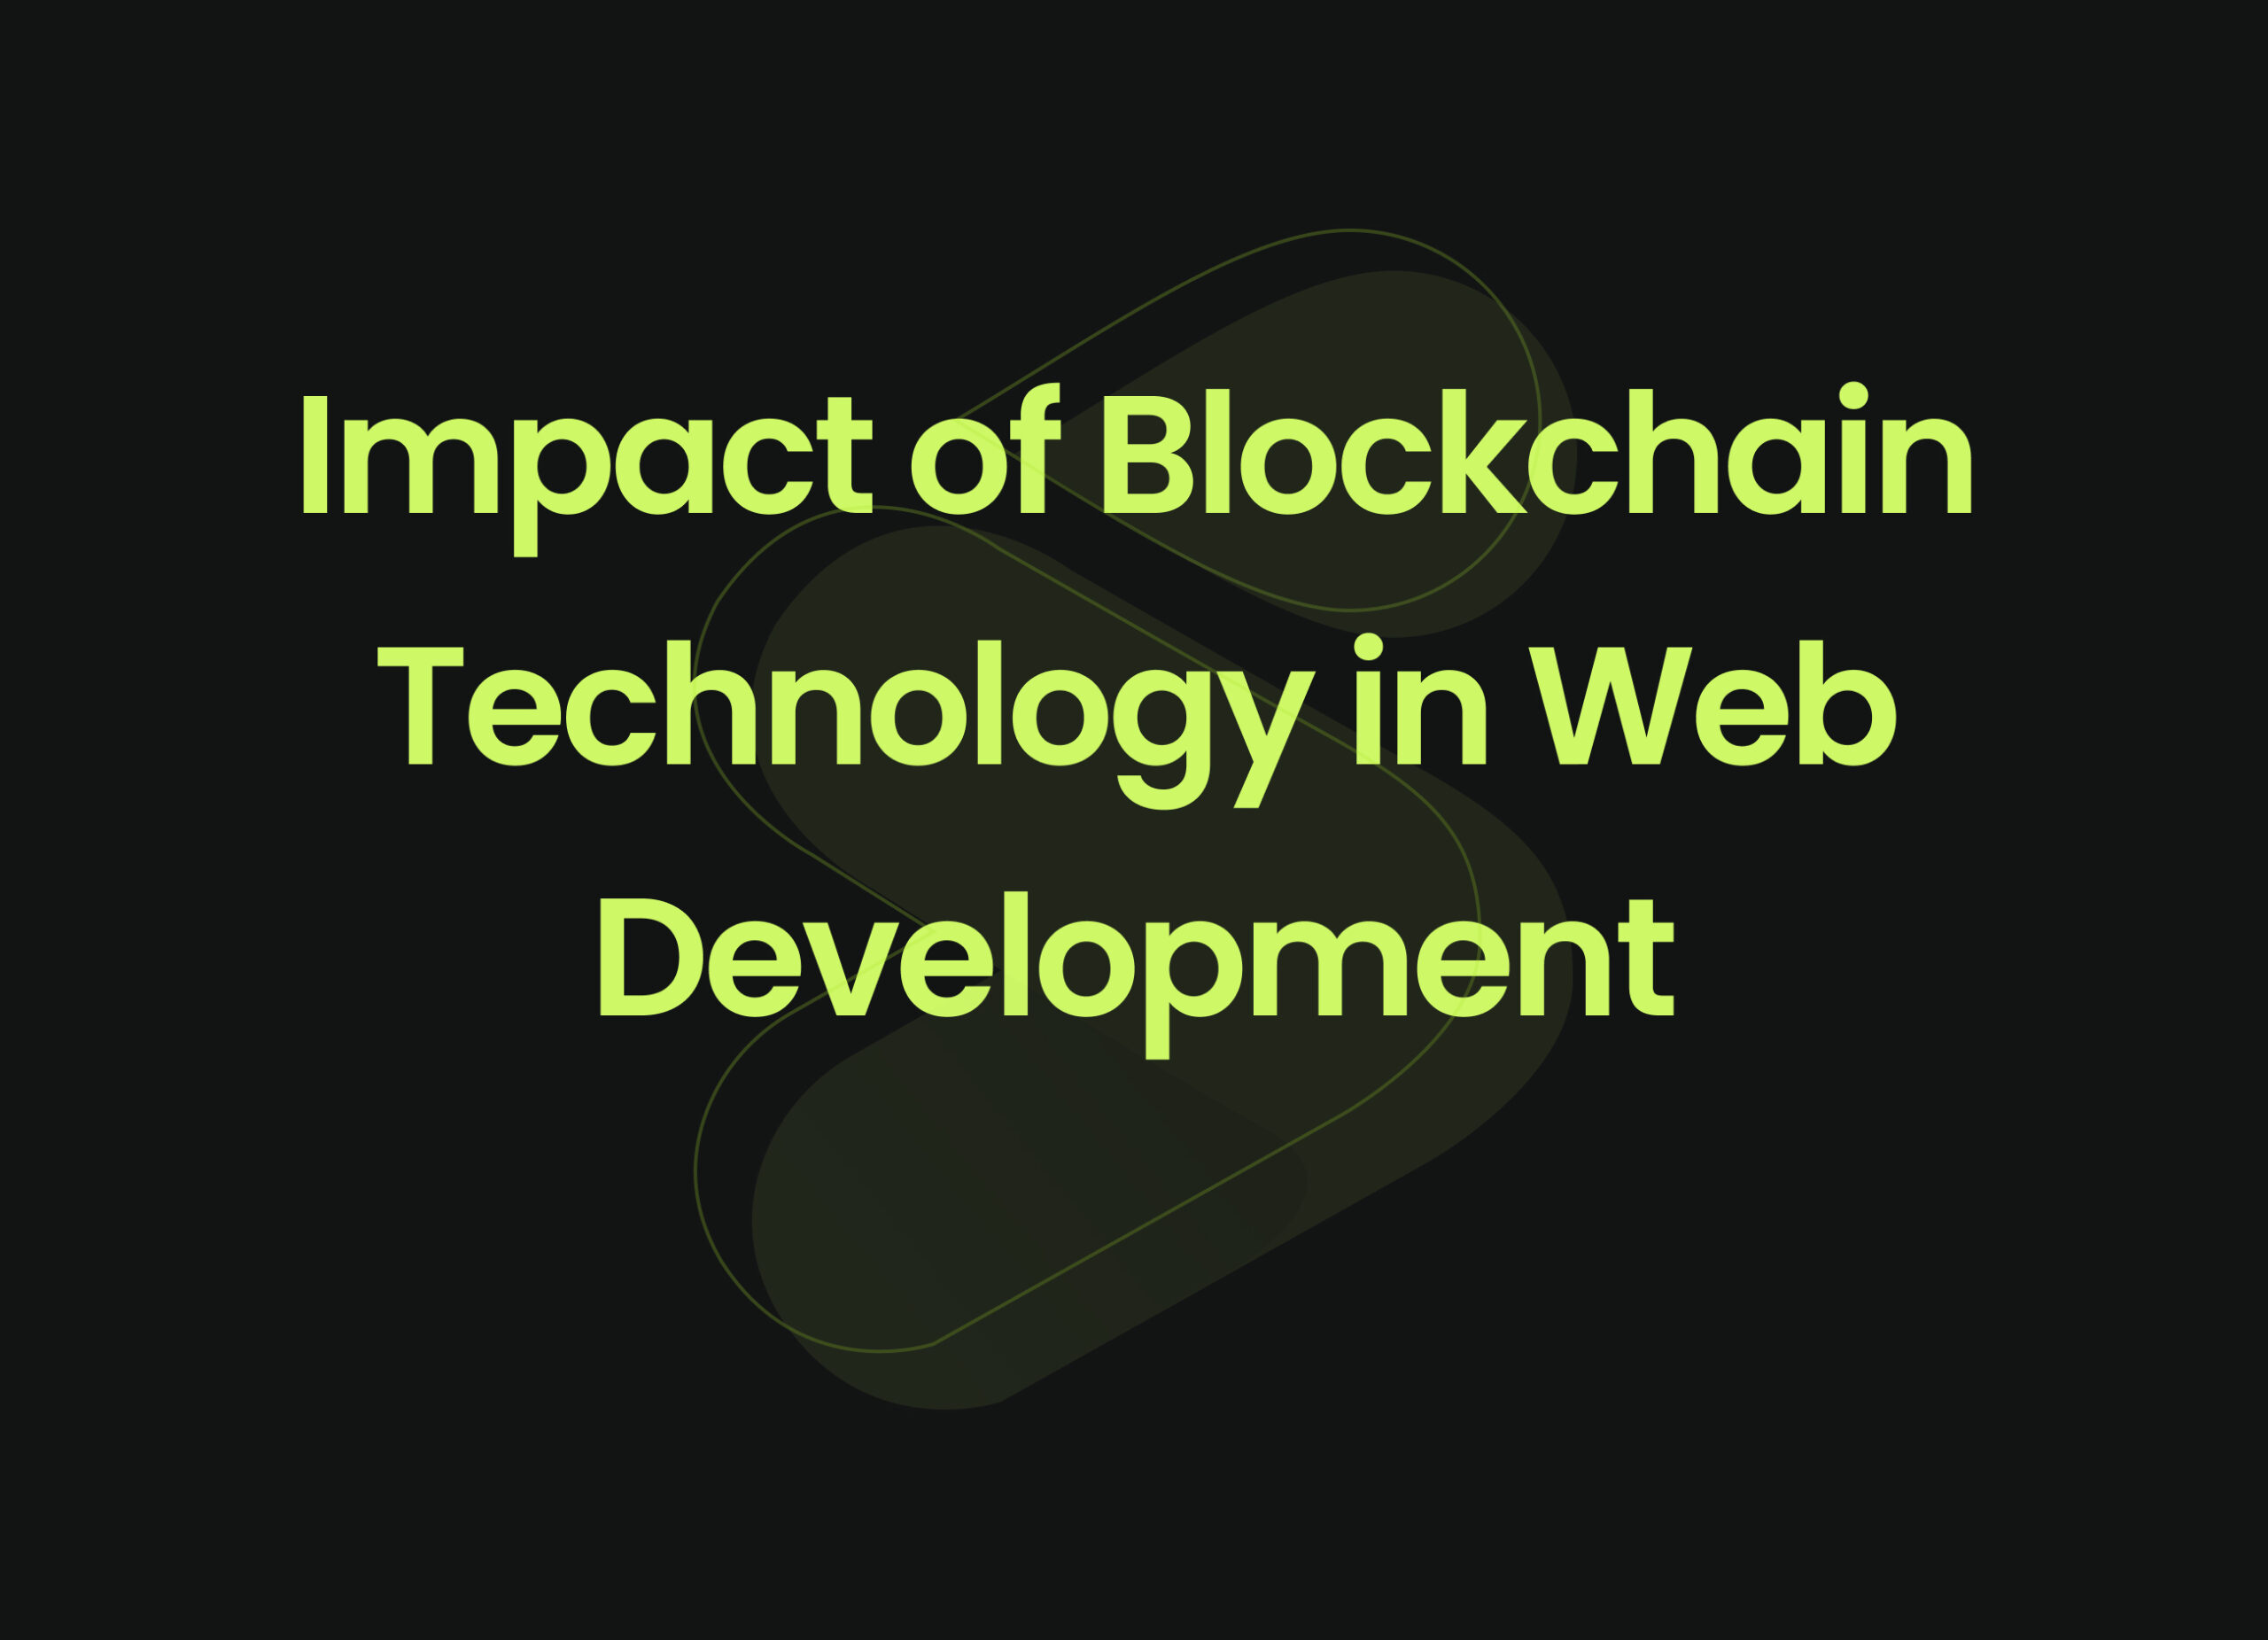 Blockchain technology in web development